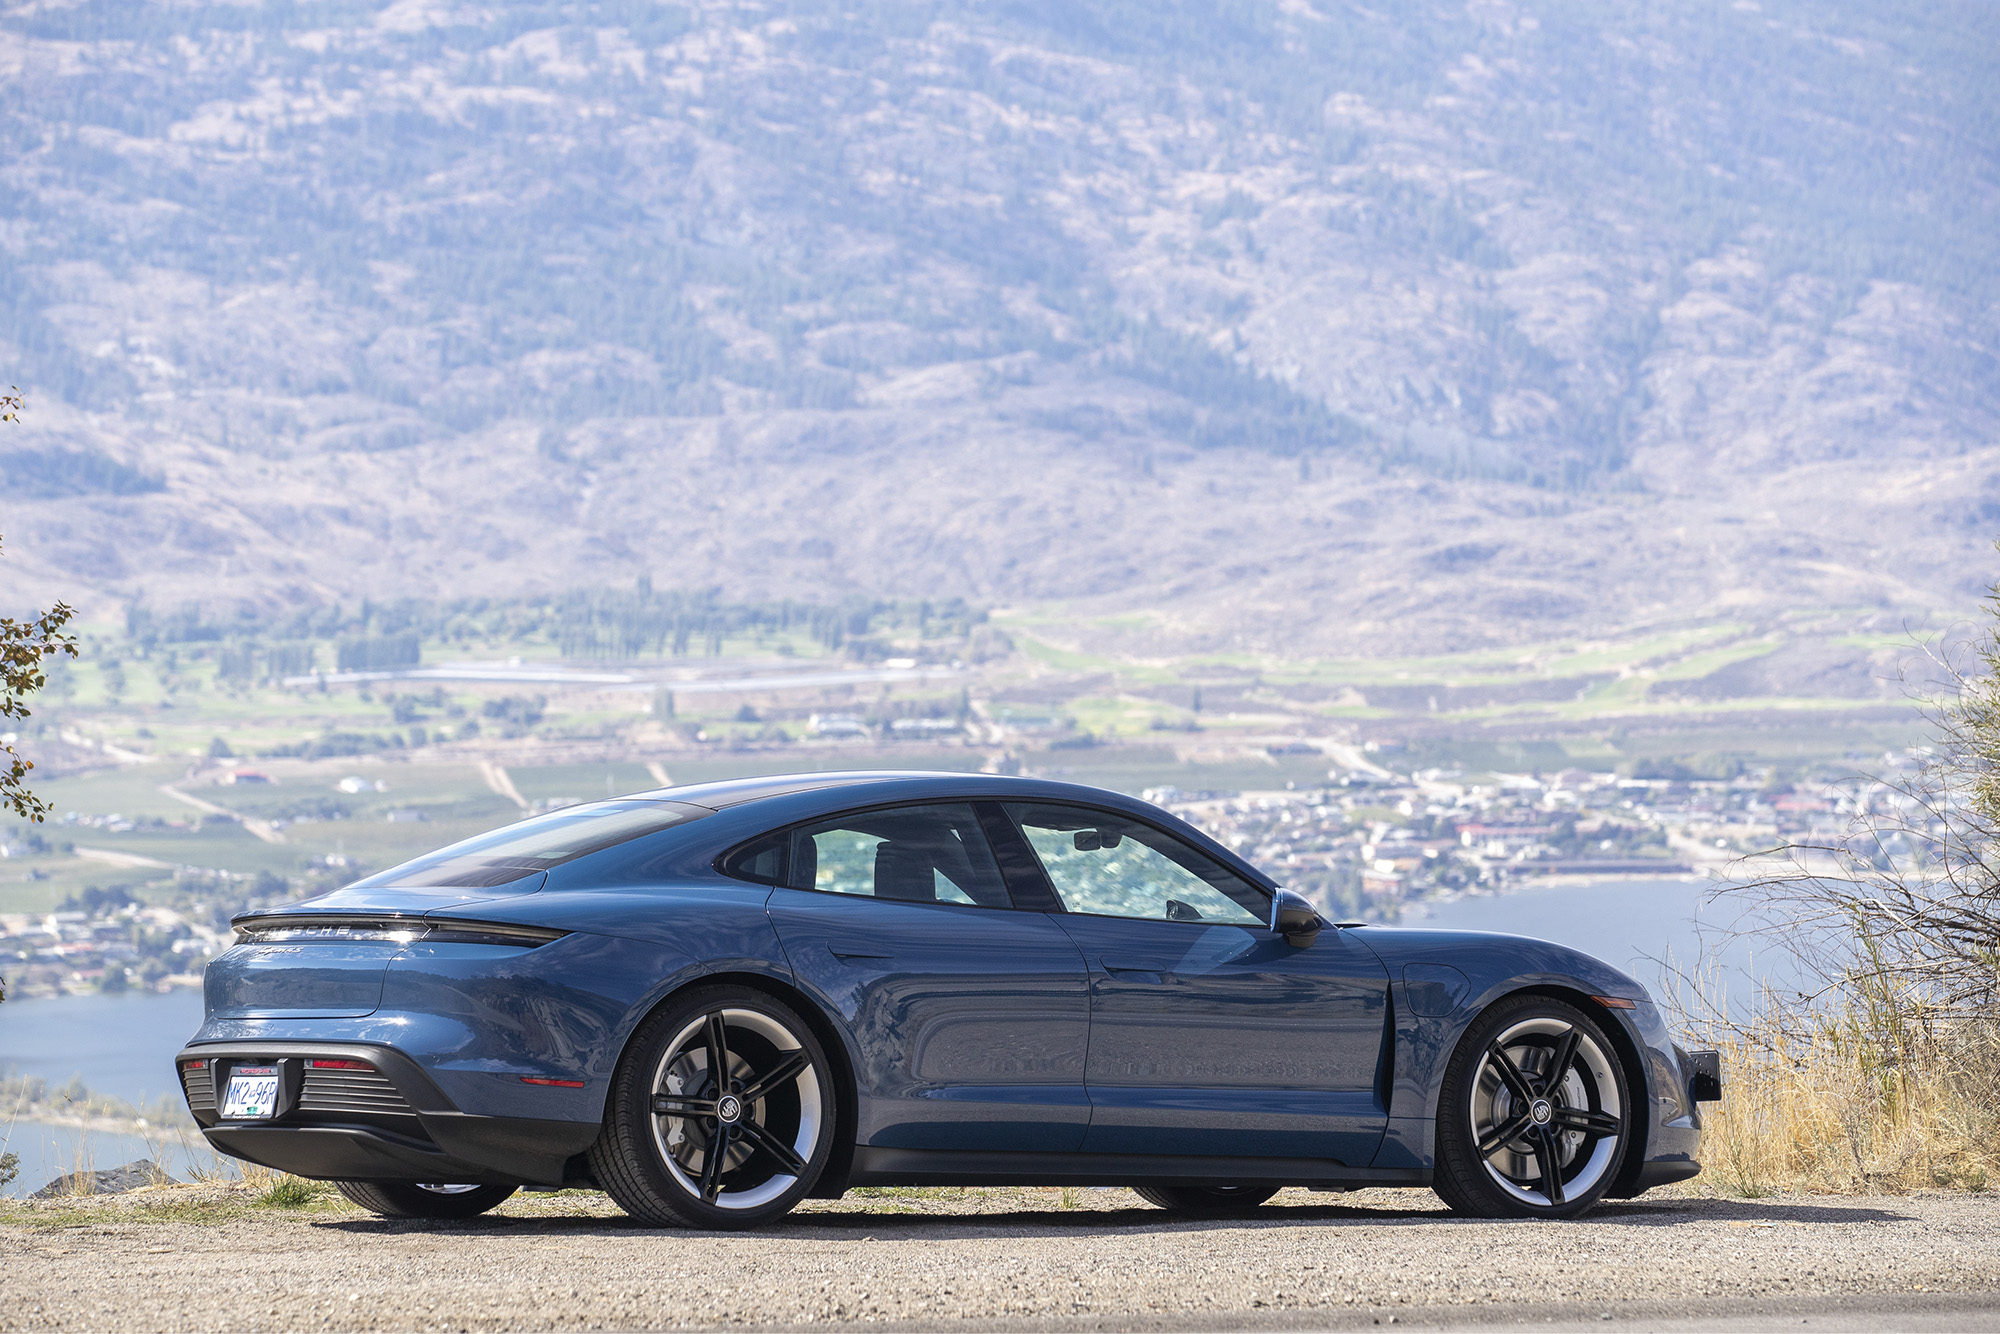 Spirit Ridge Resort: blue Porsche parked in desert shot from back-side